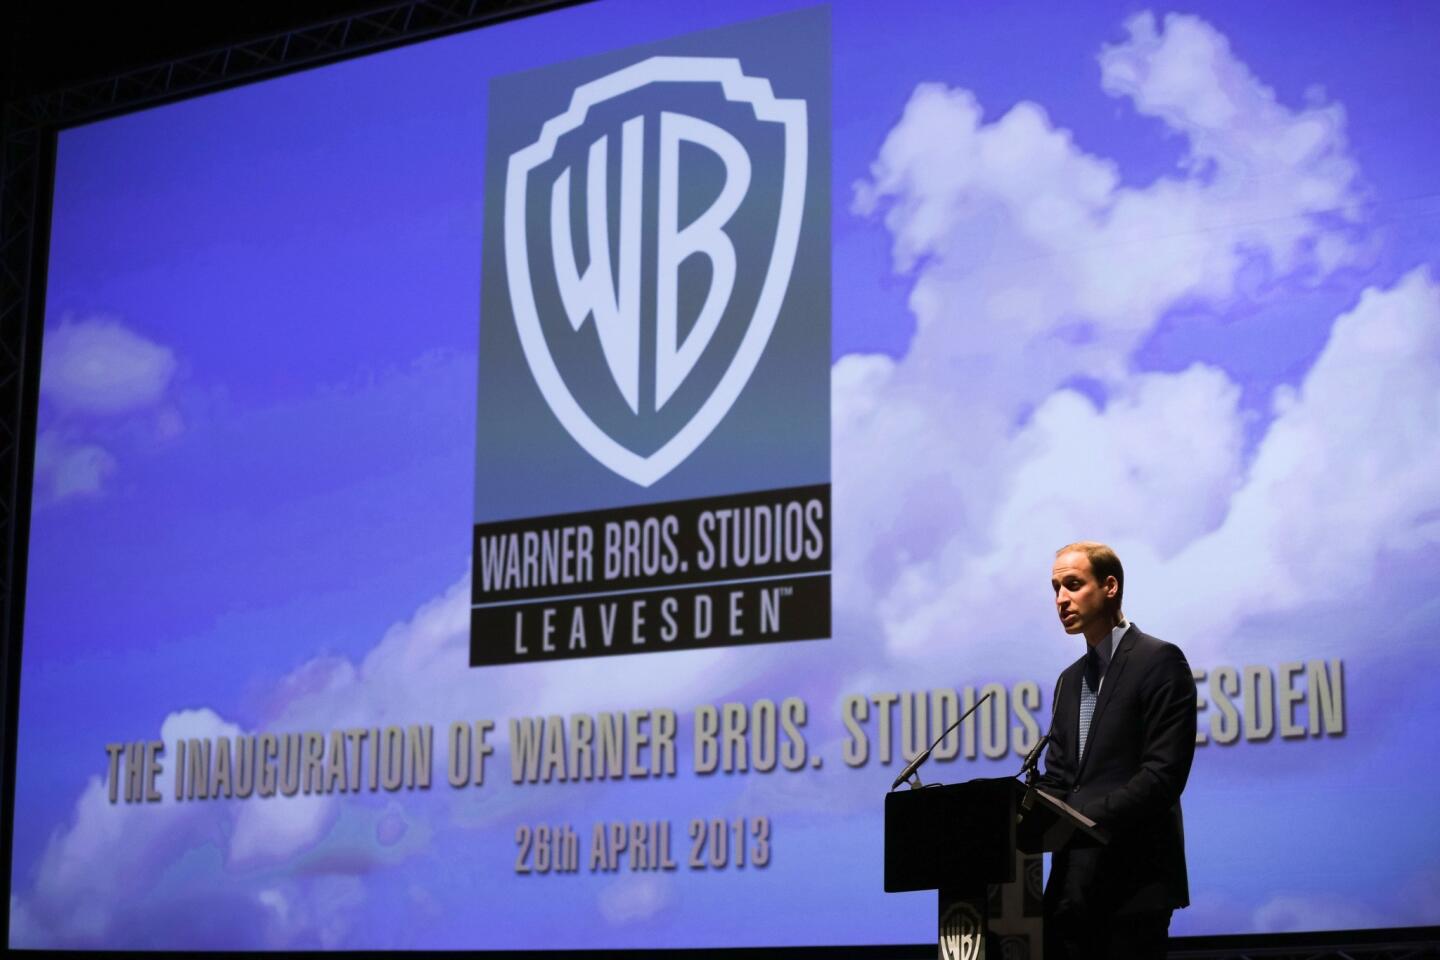 The royals visit Warner Bros. Studio Leavesden